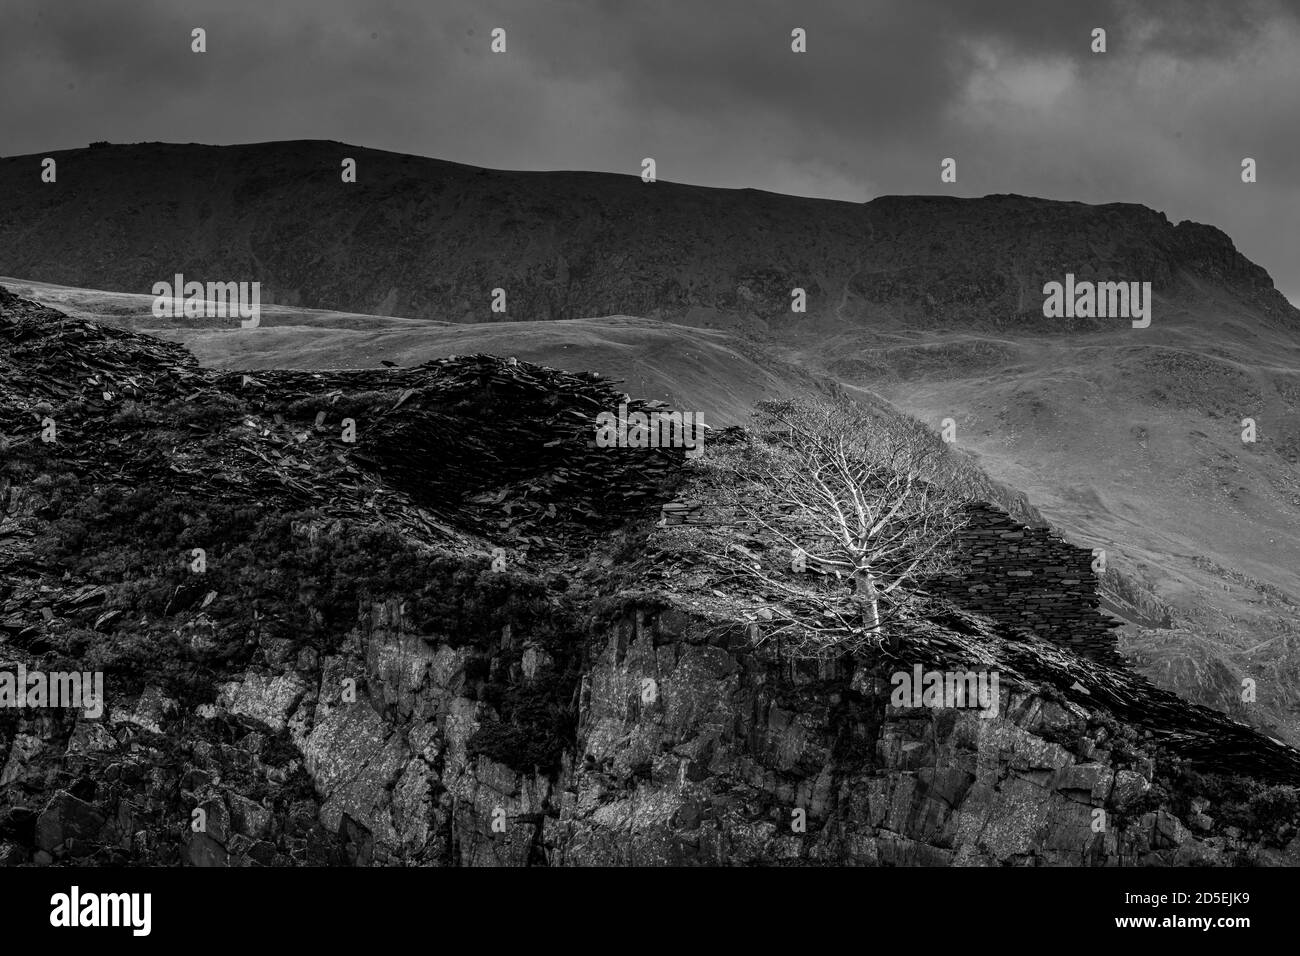 Dramatic Landscape image of the Dinorwic Slate Quarry in LLanberis, Wales Stock Photo